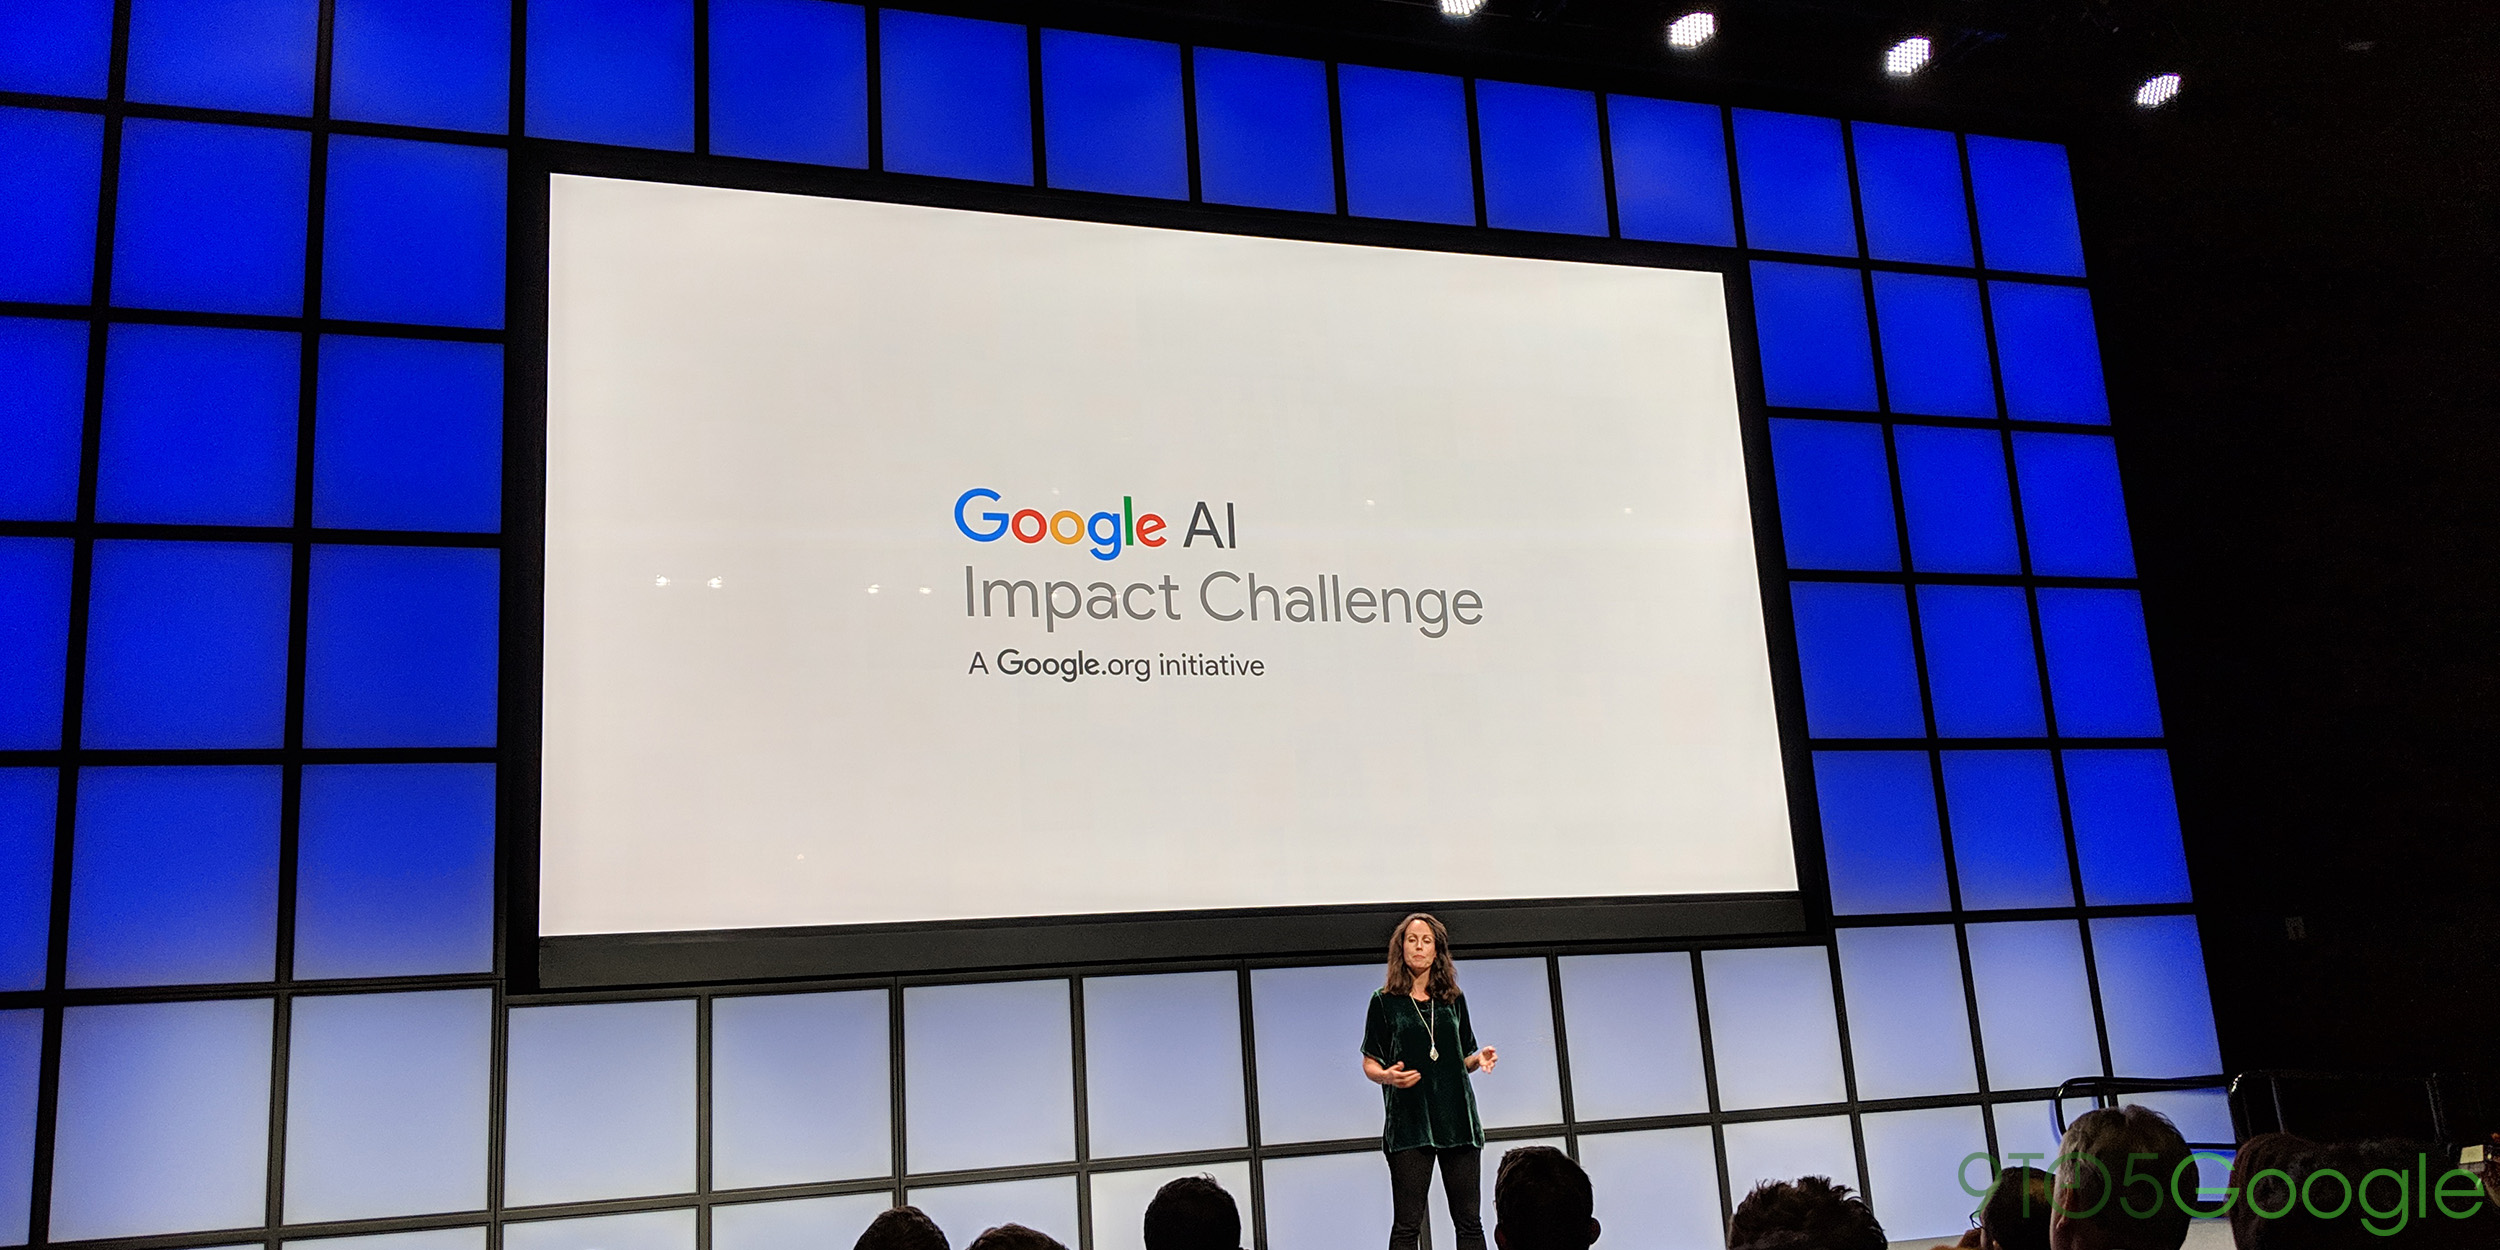 Google AI Impact Challenge providing 25M to address world issues